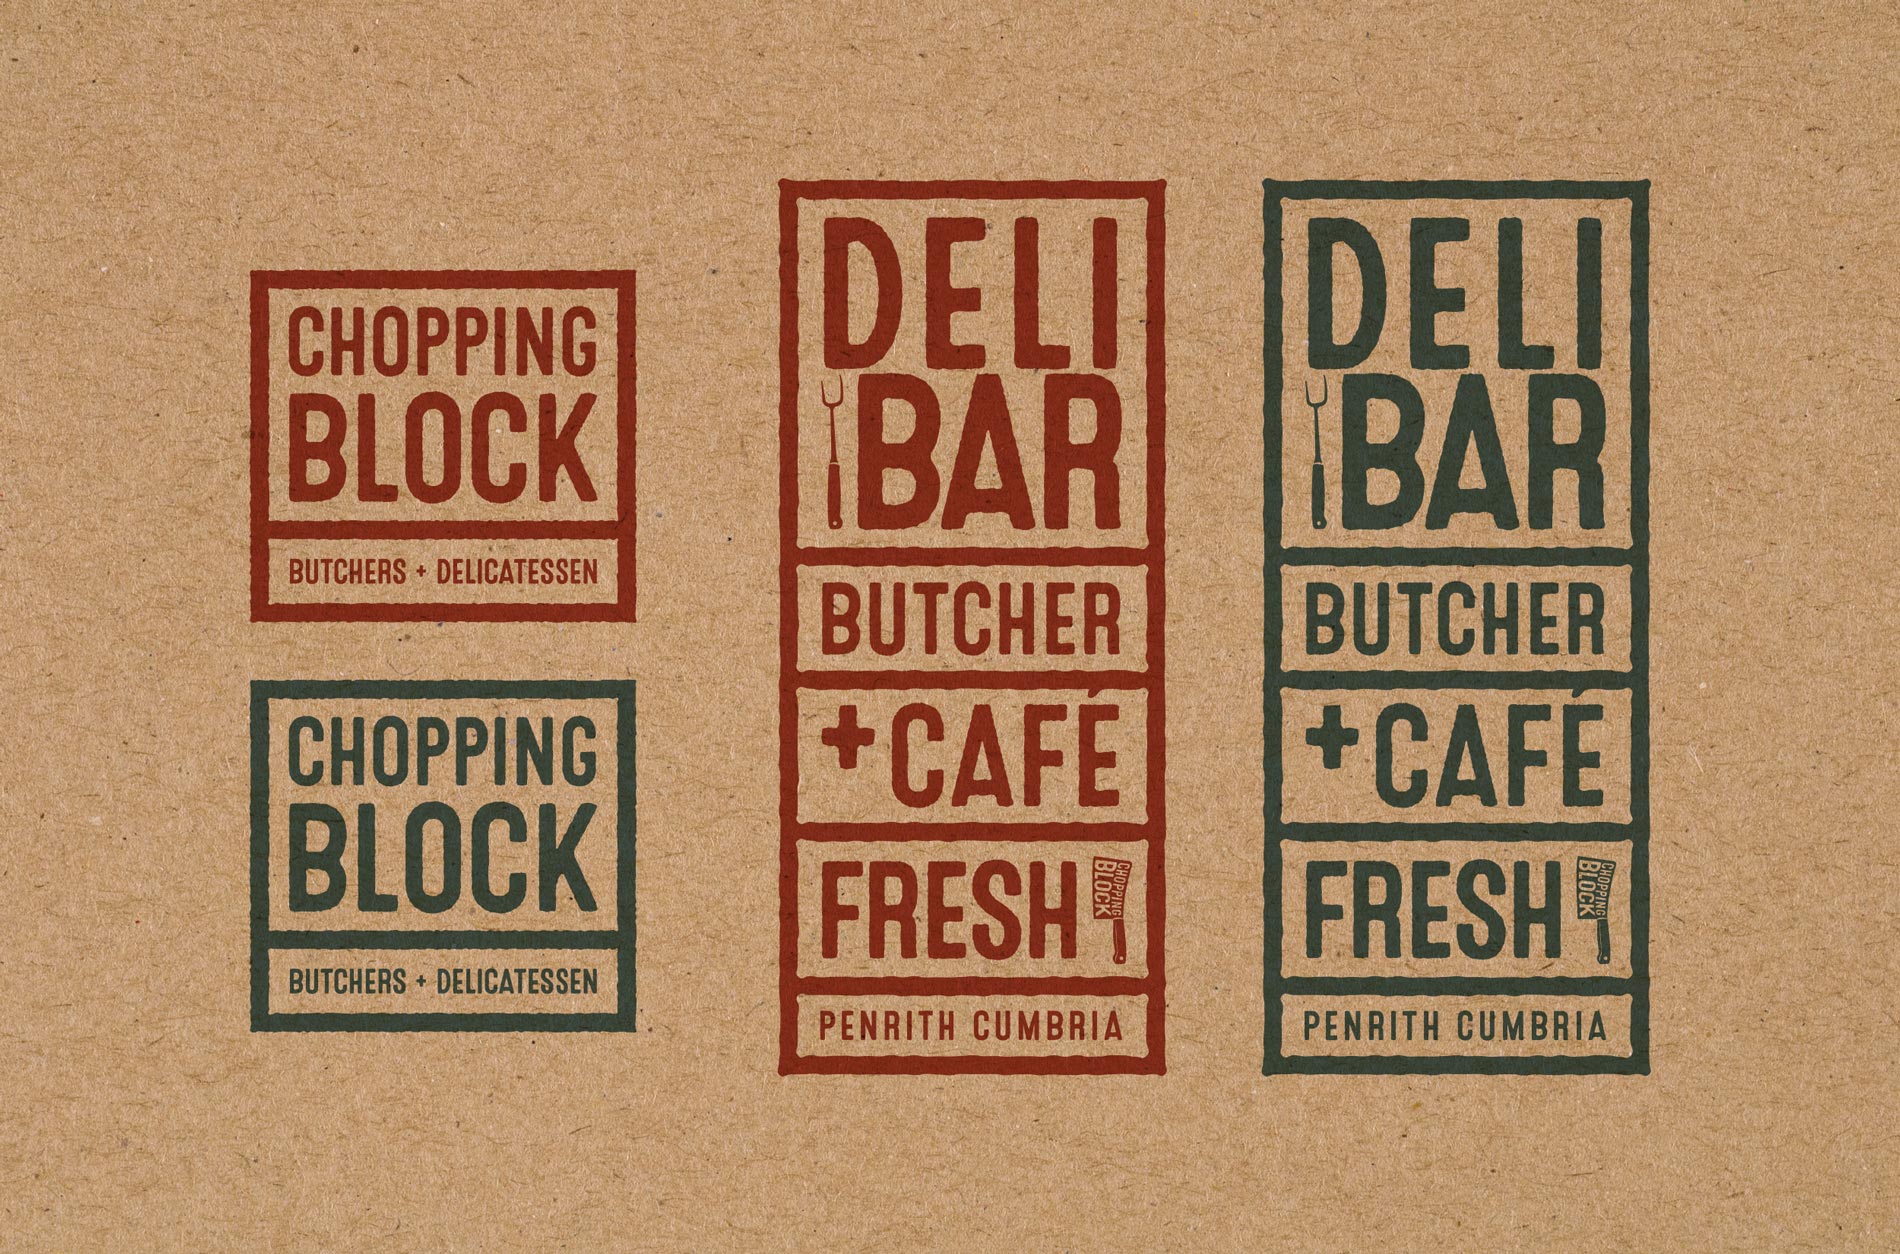 The Chopping Block Butcher & Deli Logo Design Concepts